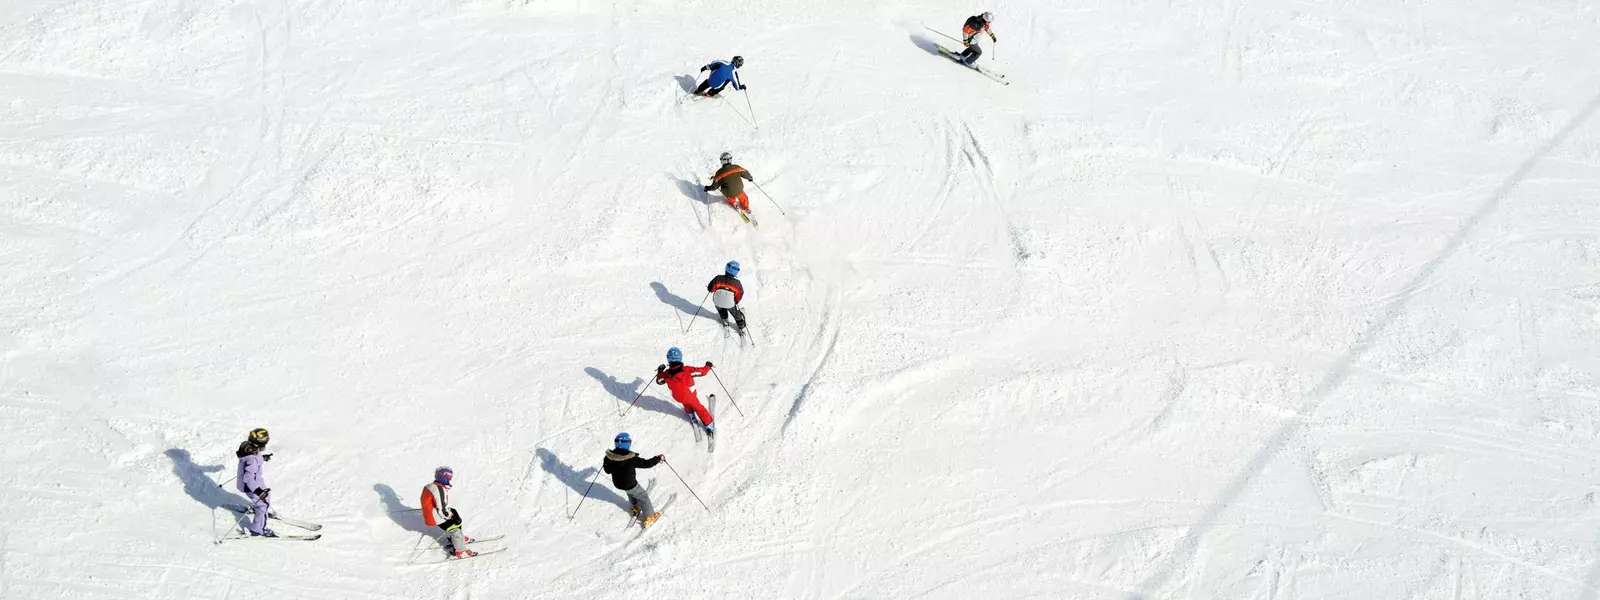 Skikurs, Kinder fahren hinter dem Skilehrer her